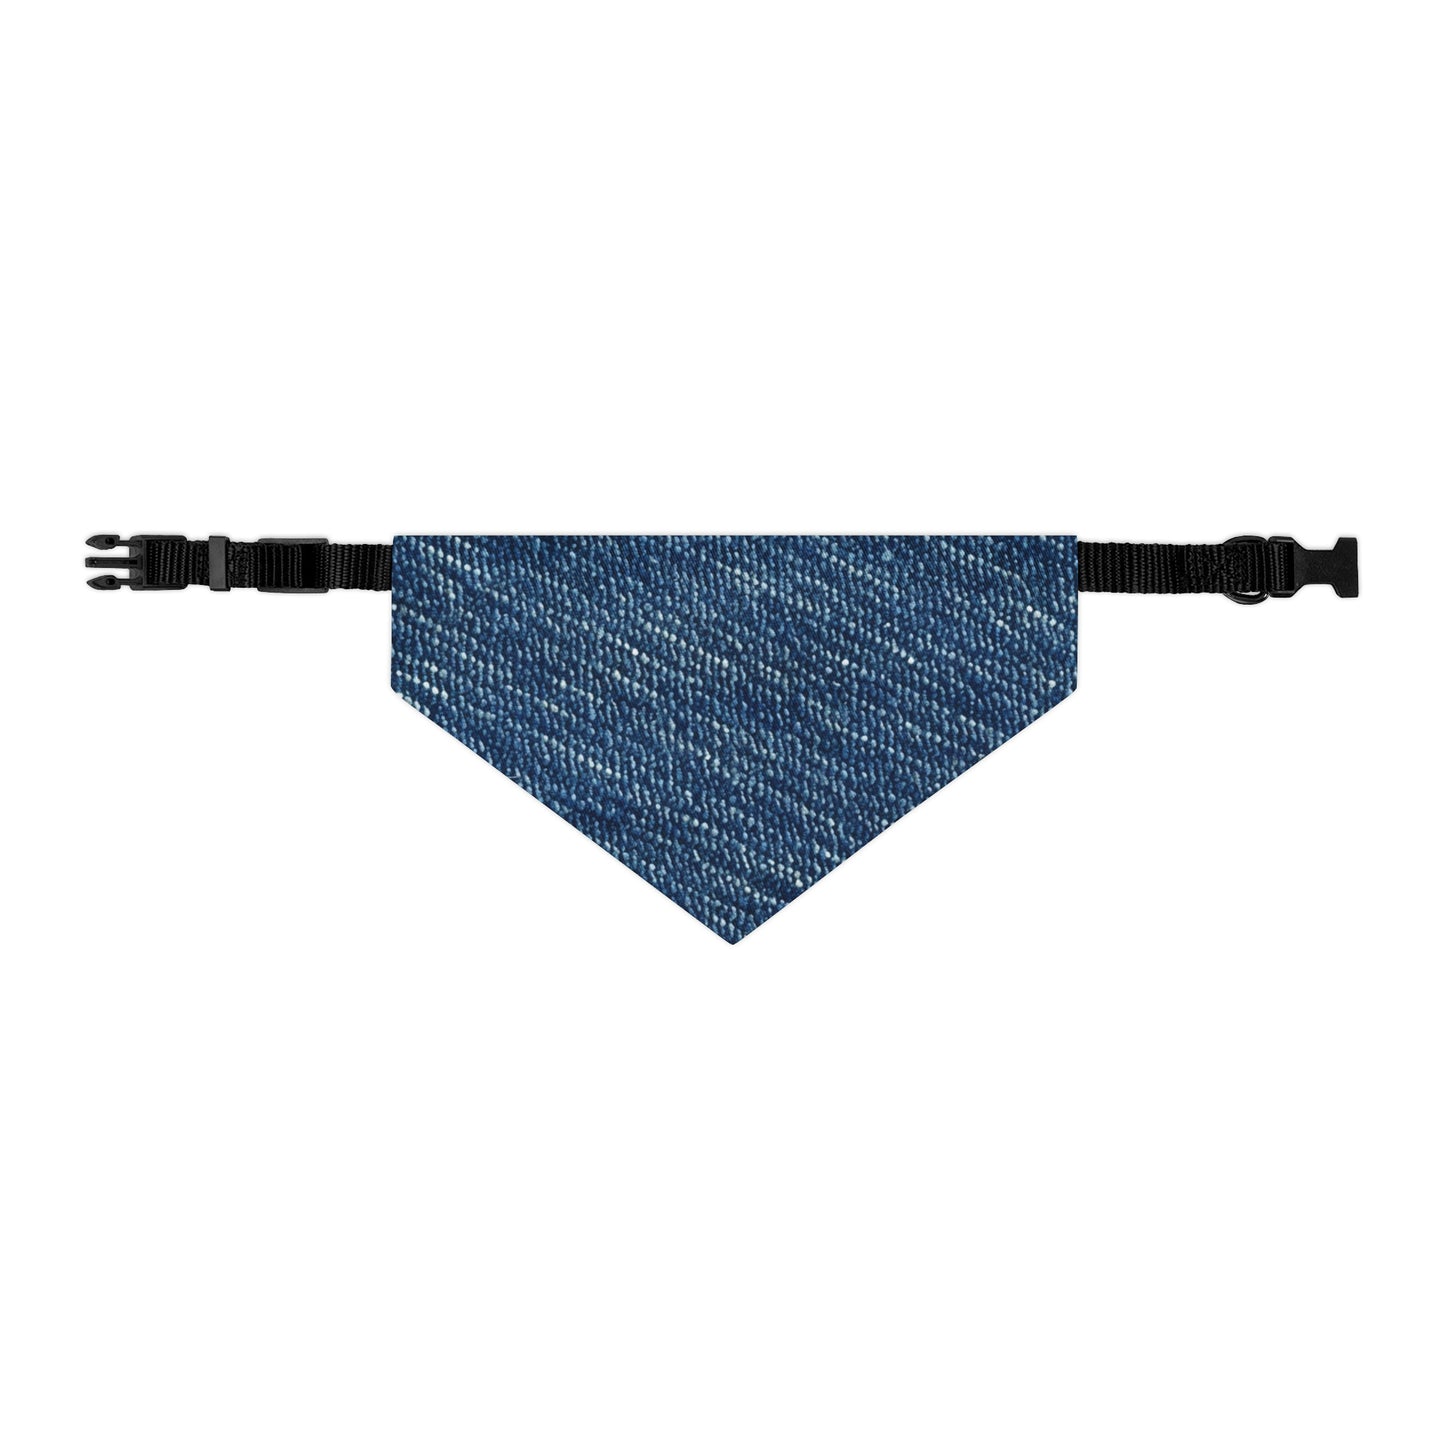 Denim-Inspired Design - Distinct Textured Fabric Pattern - Pet Bandana Collar